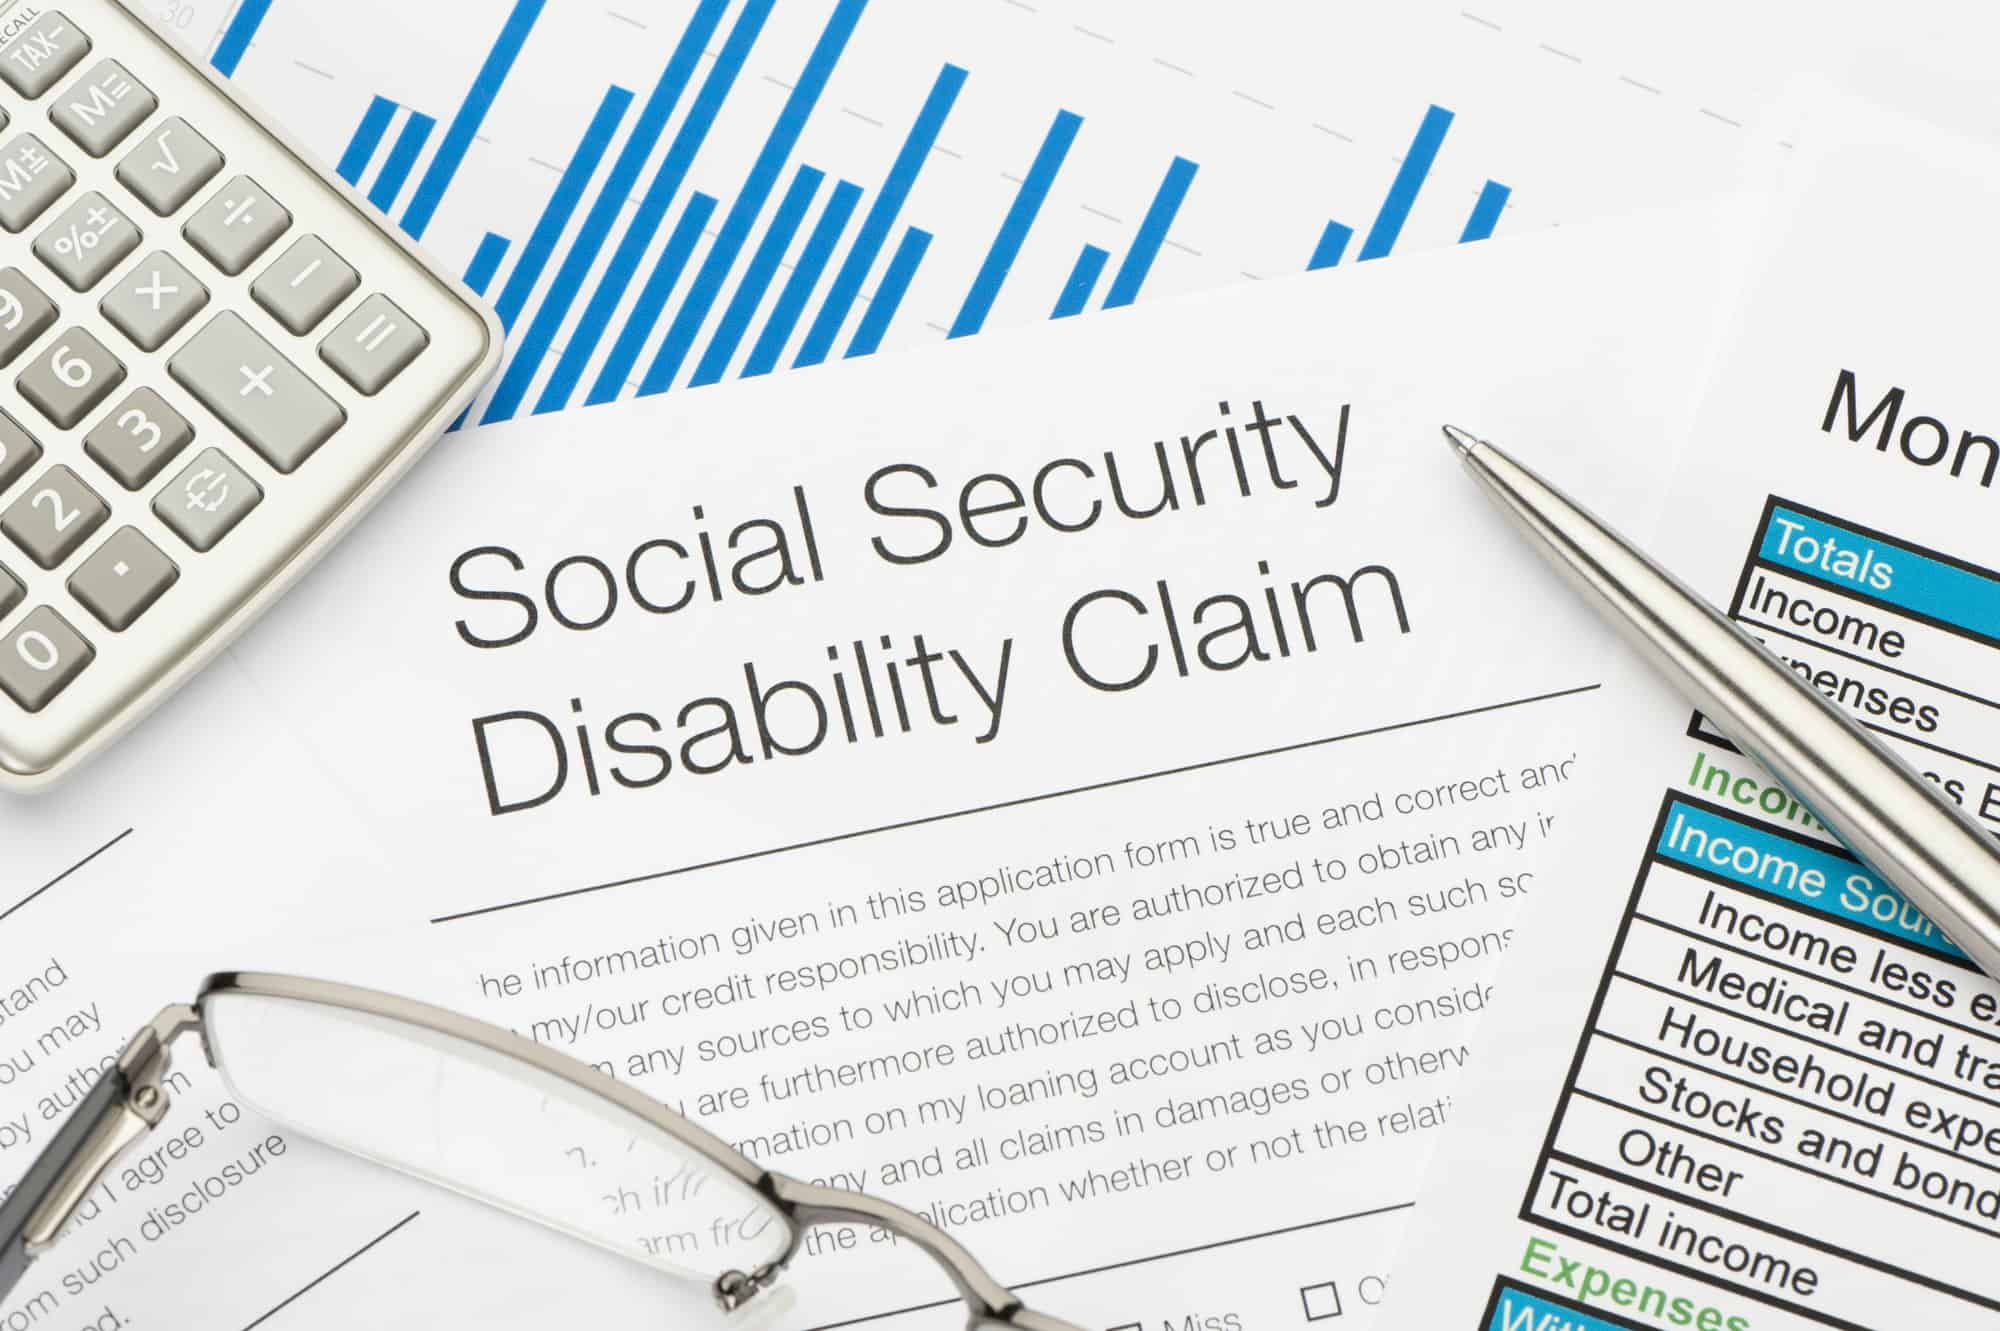 ocial Security Disability Claim Form